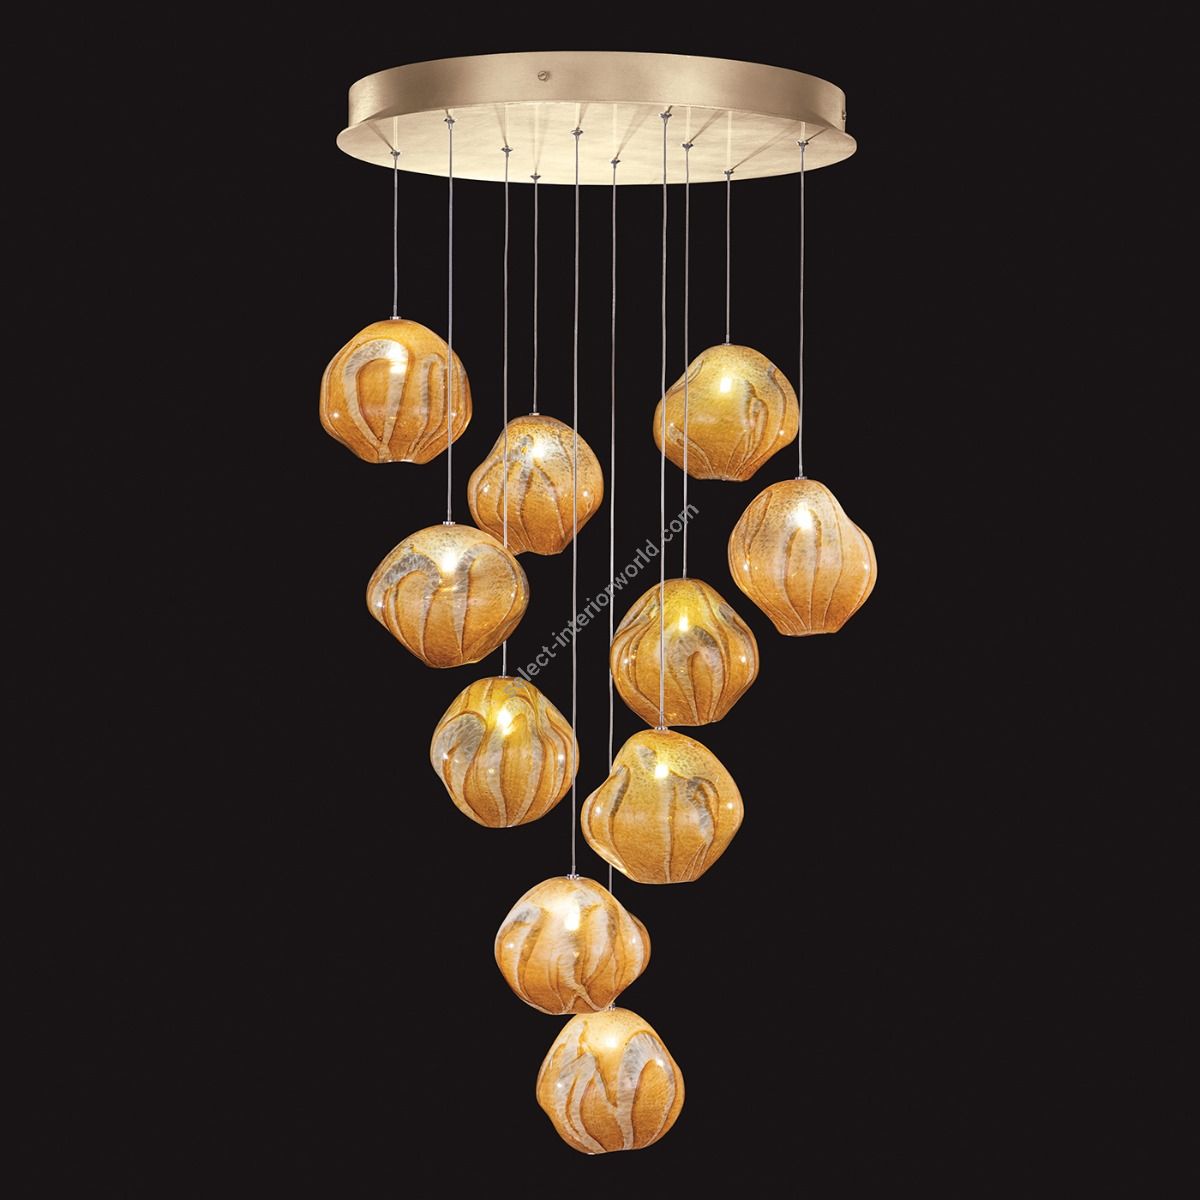 Vesta 22″ Round Pendant Light 869040 by Fine Art Handcrafted Lighting